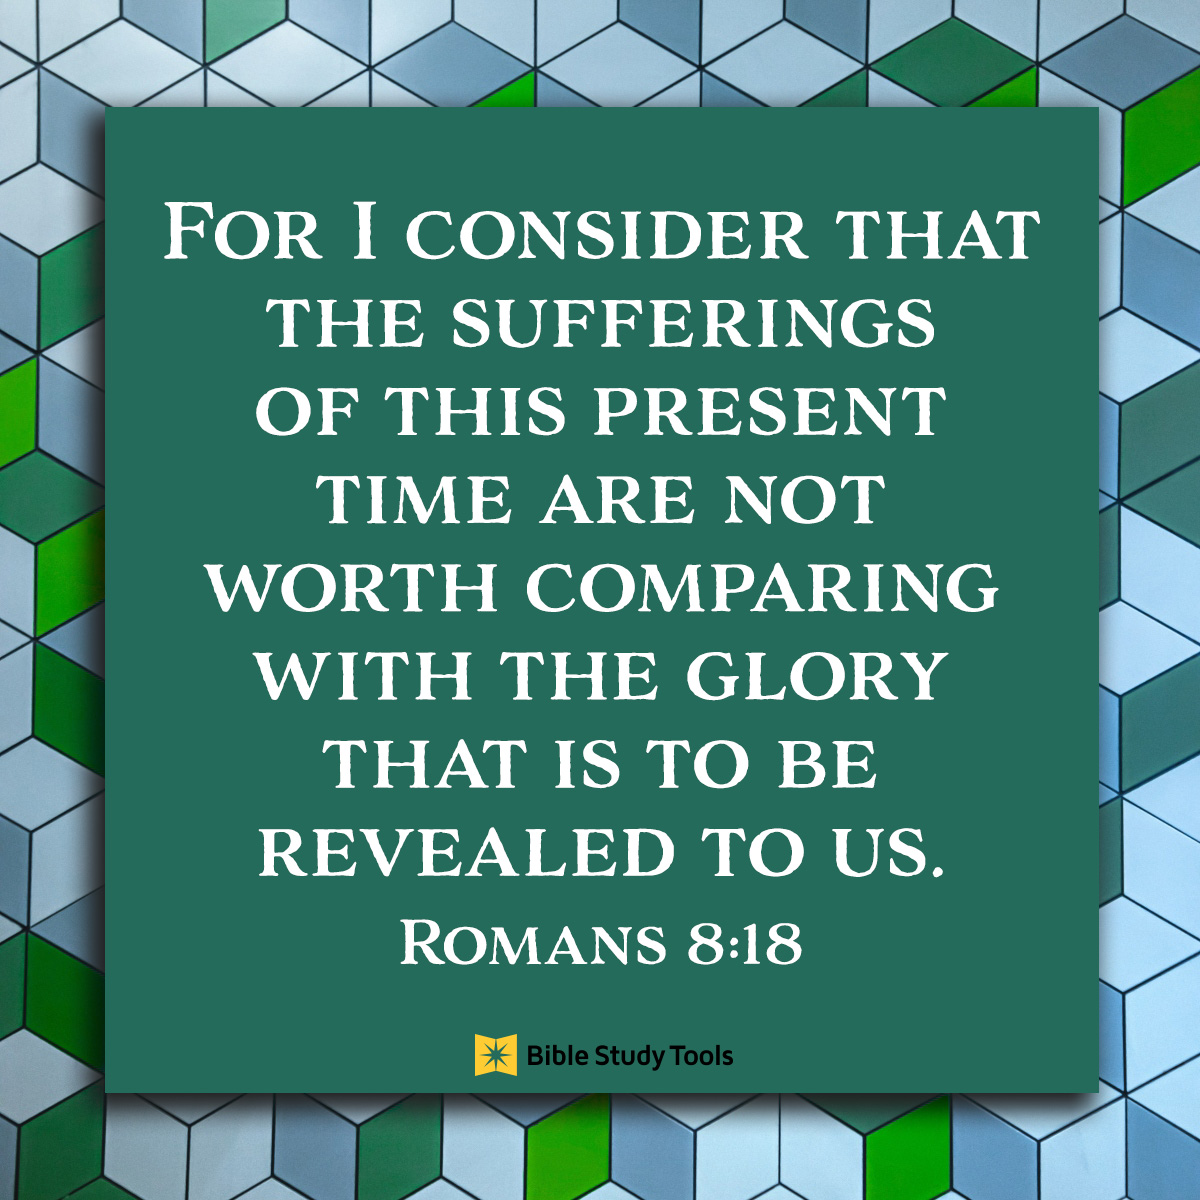 Romans 8:18, inspirational image